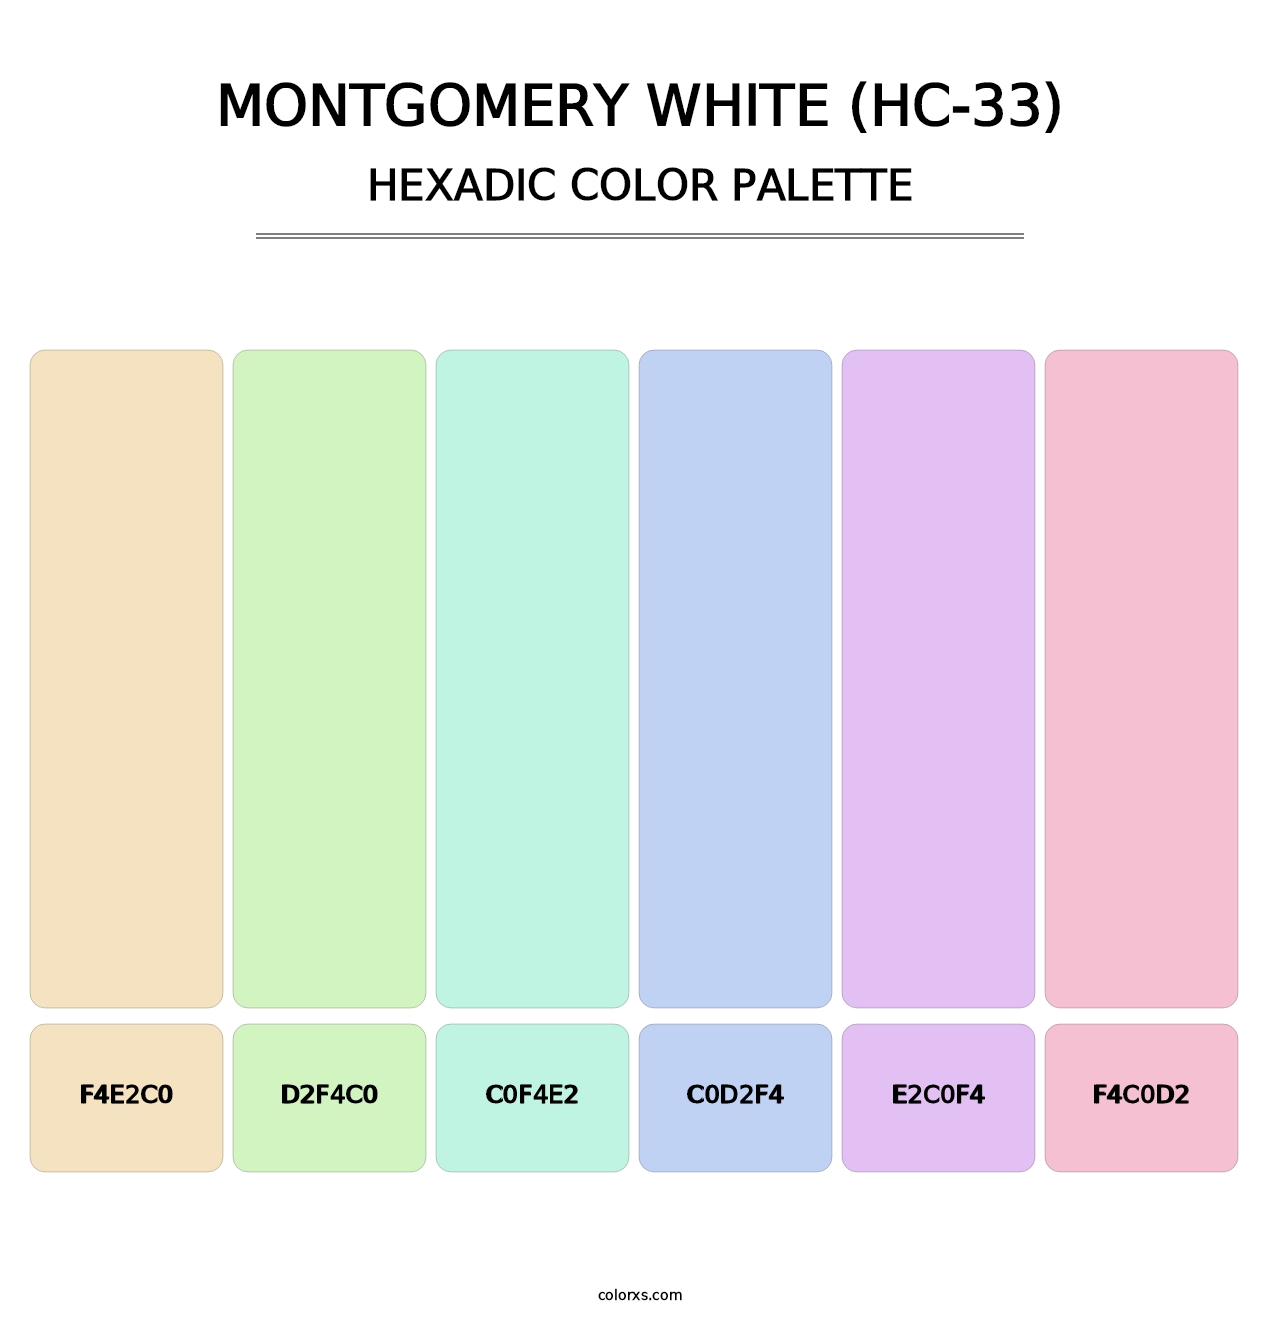 Montgomery White (HC-33) - Hexadic Color Palette